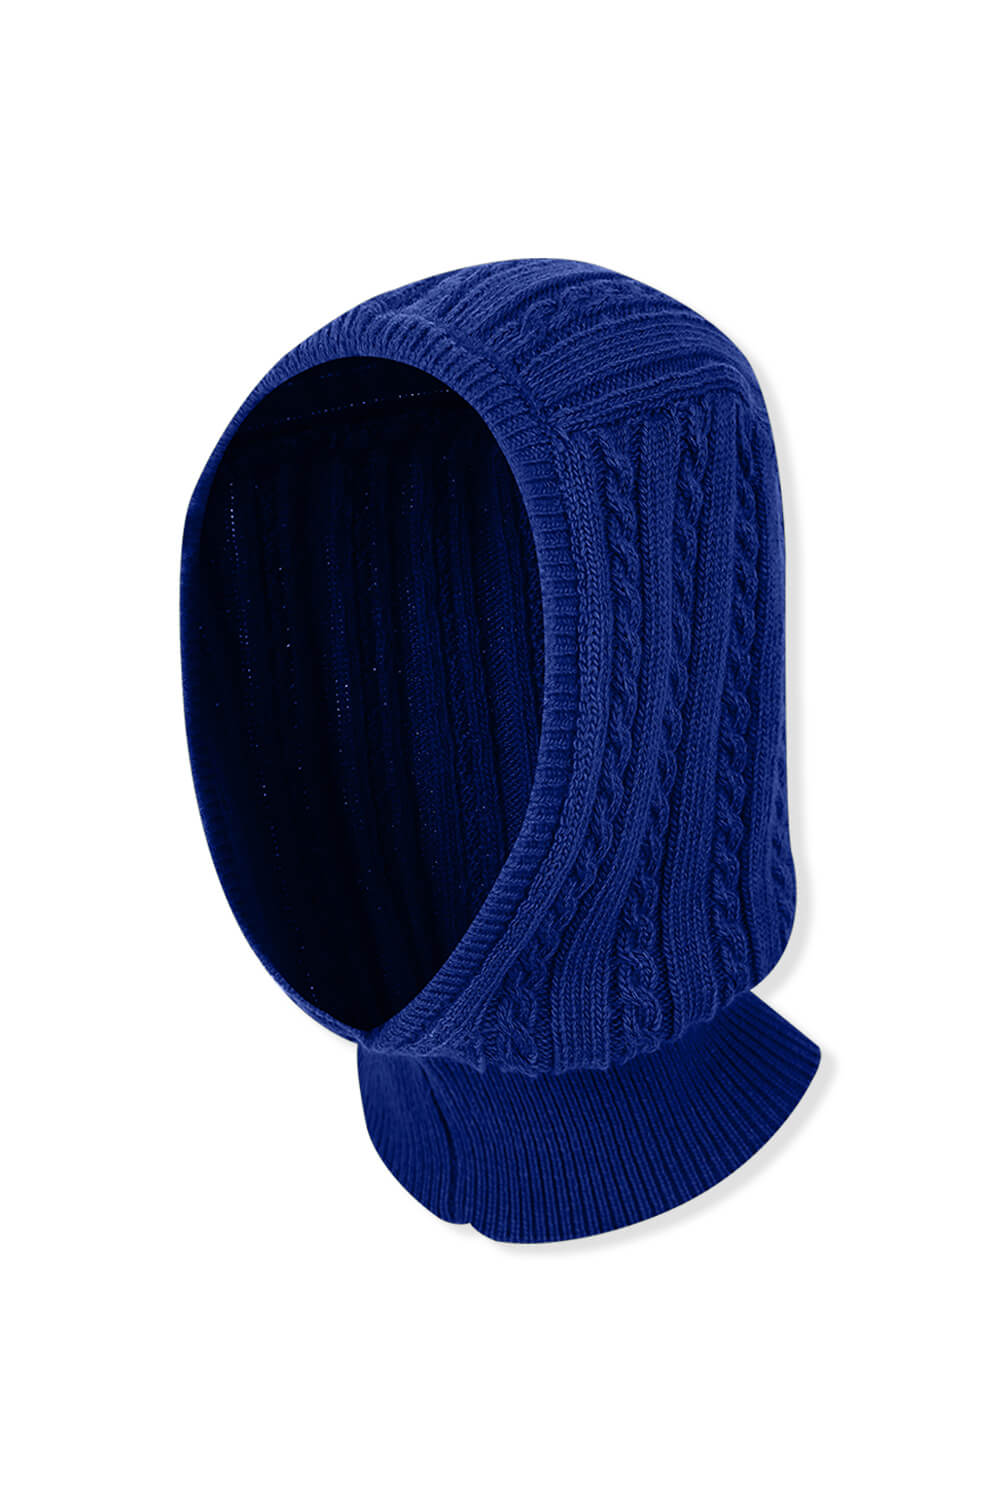 [2nd Reorder] Wearing Ryu Yi Seo (UNI) Monceau Cable Knit Balaclava_Royal Blue